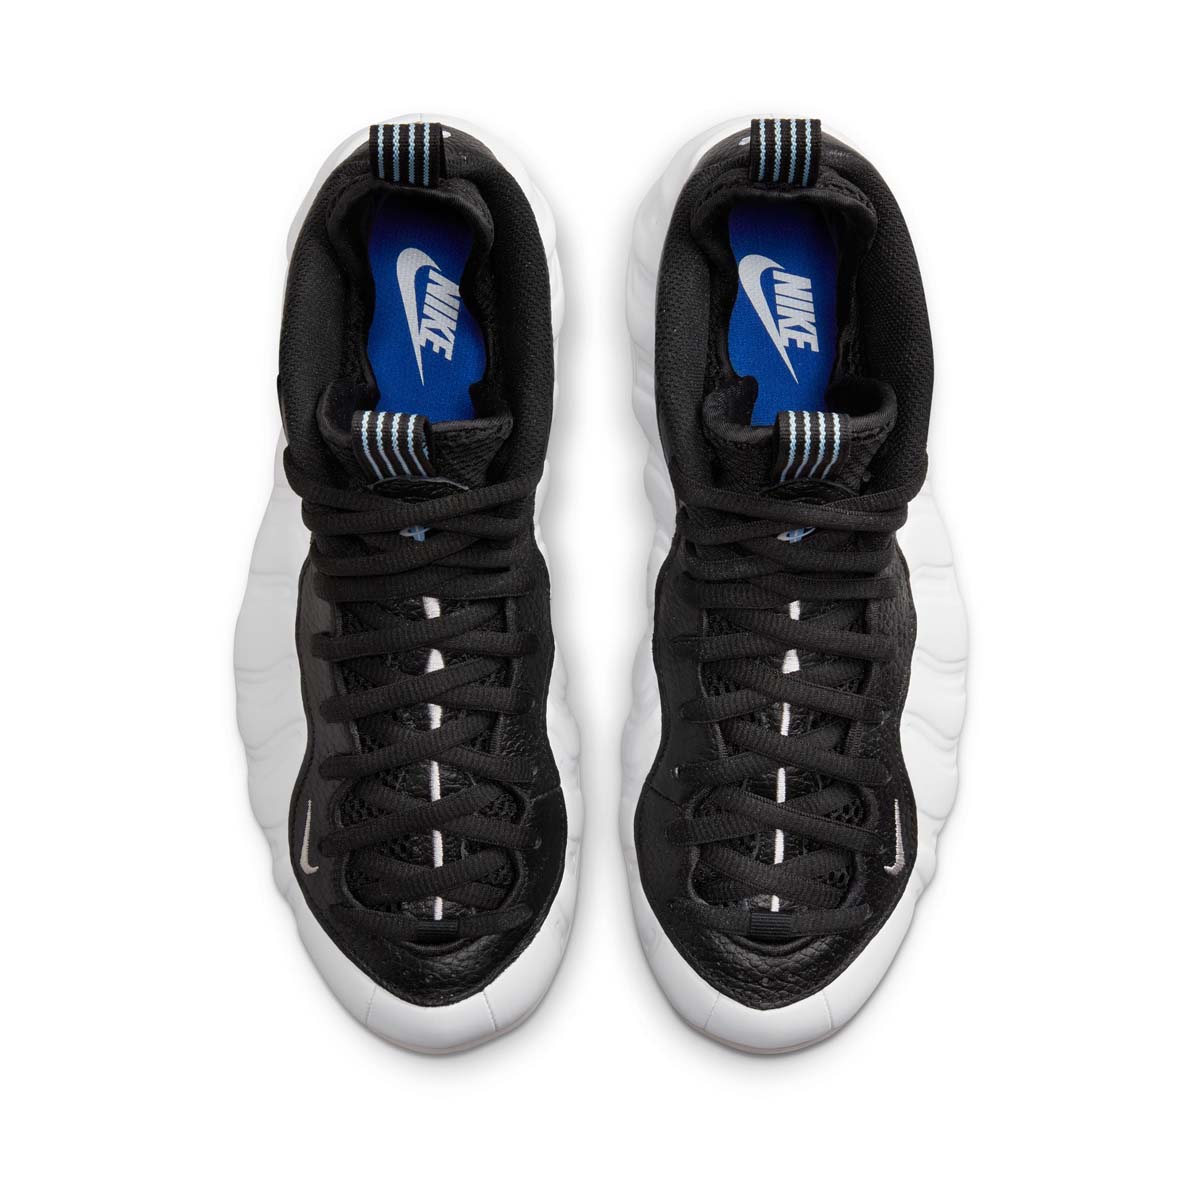 Nike Air Foamposite One Men's Shoes.